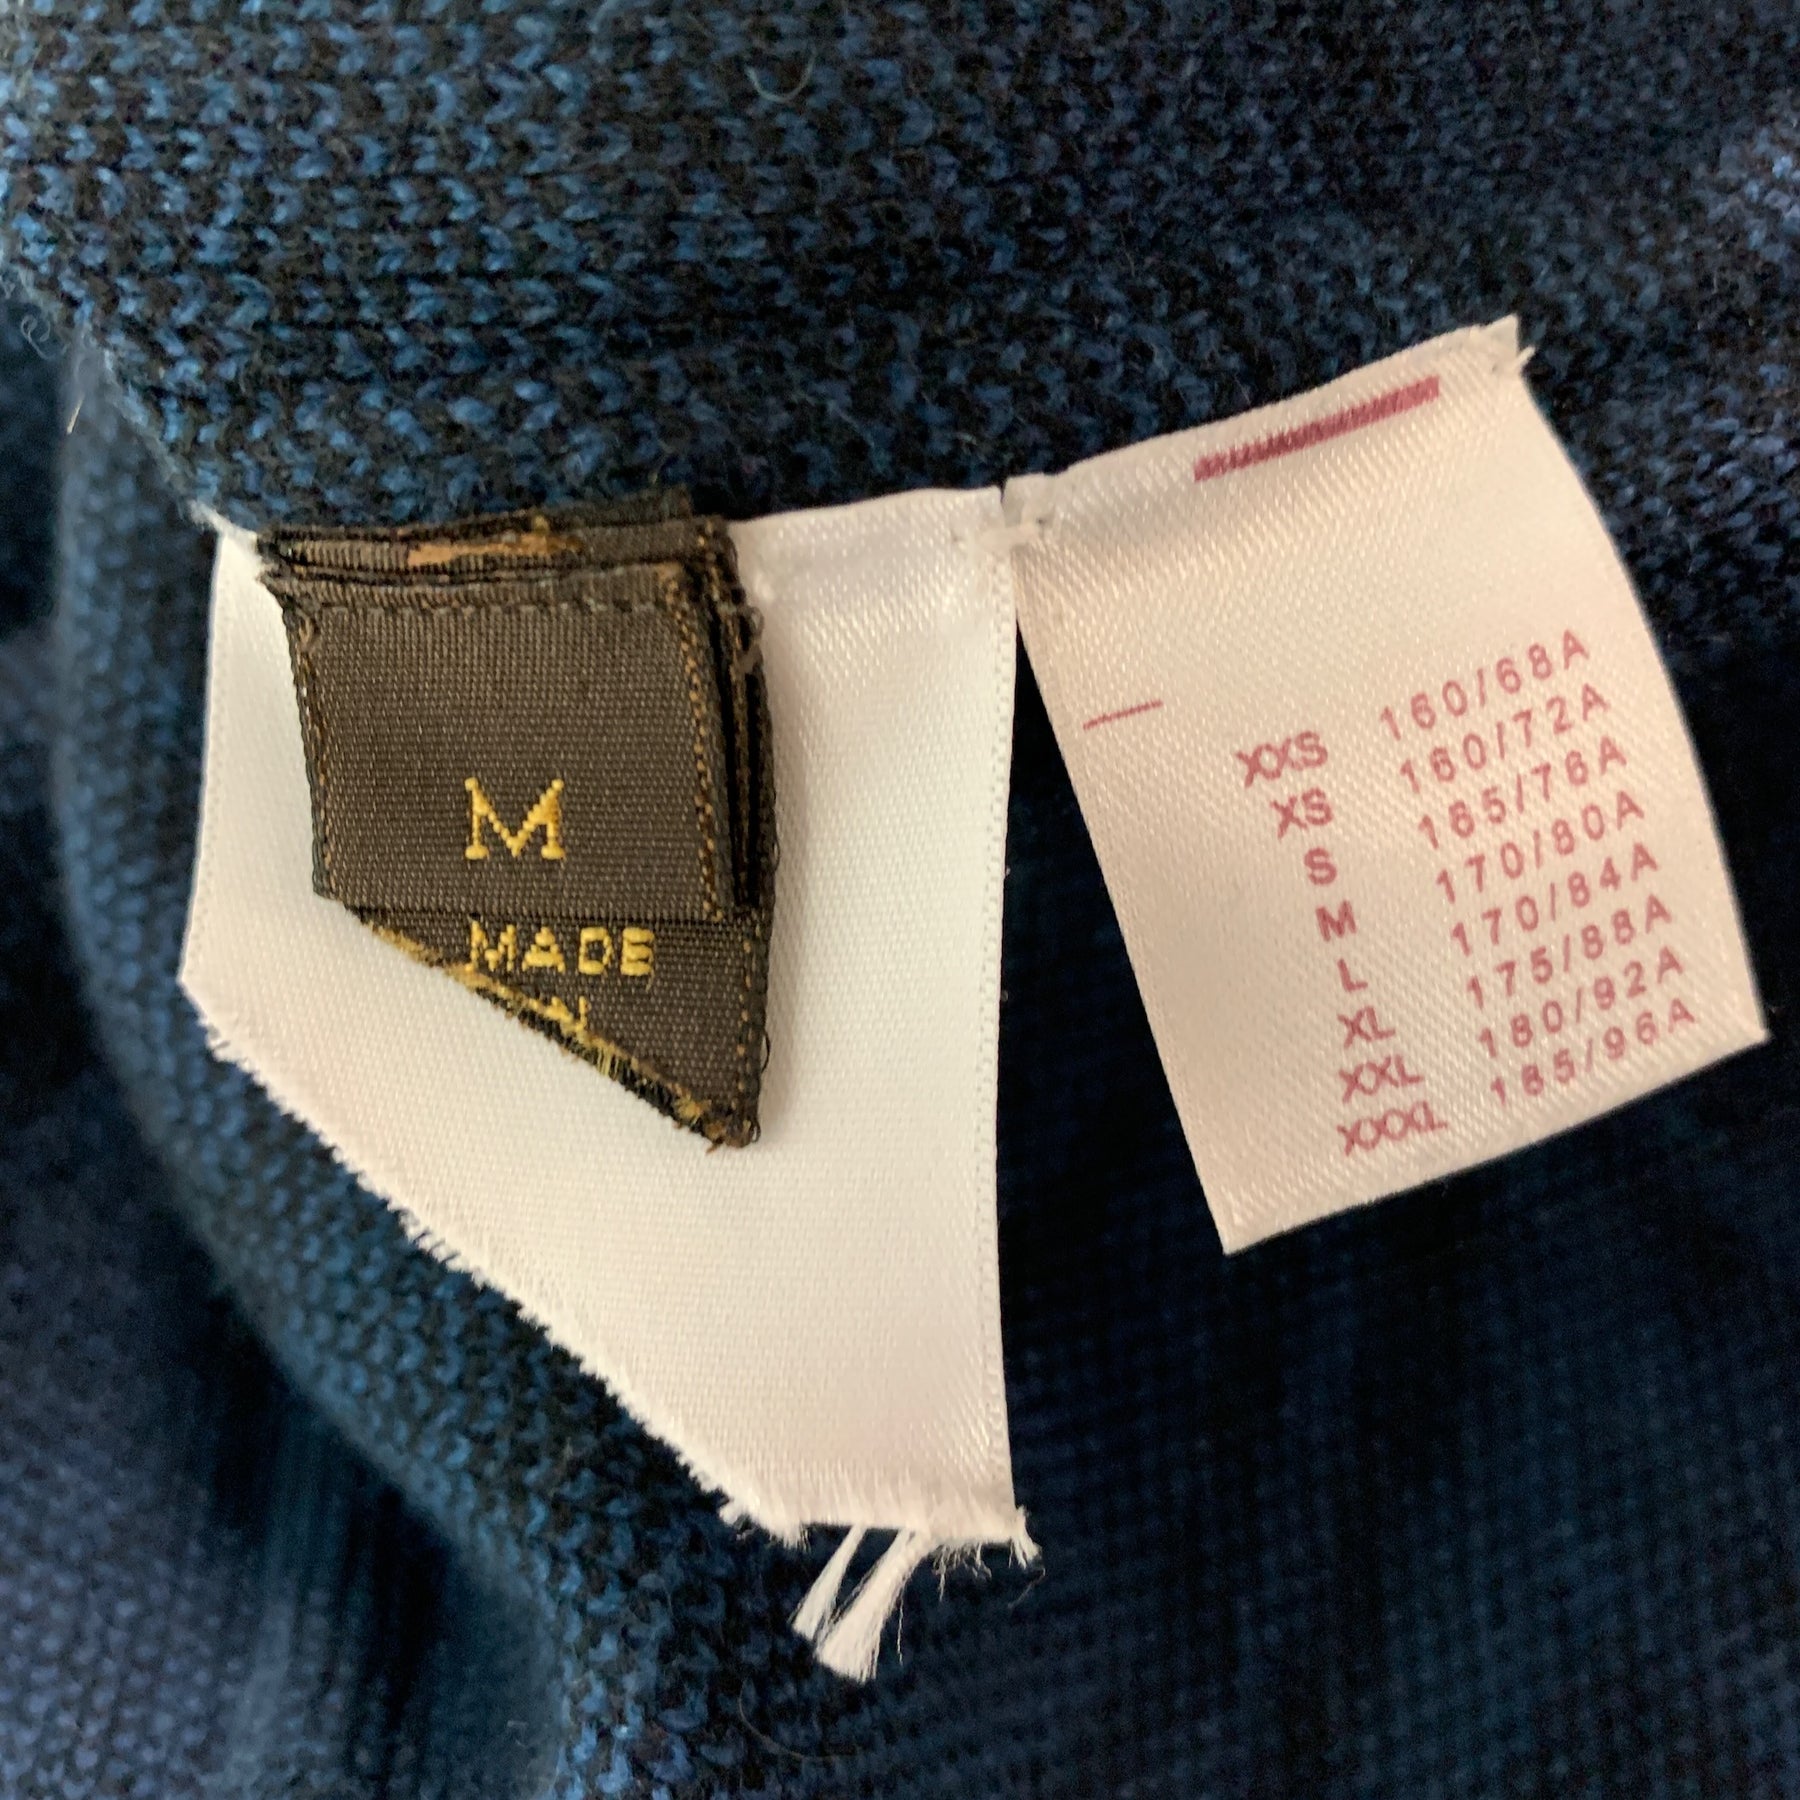 Louis Vuitton Turtleneck Sweater - Blue Knitwear, Clothing